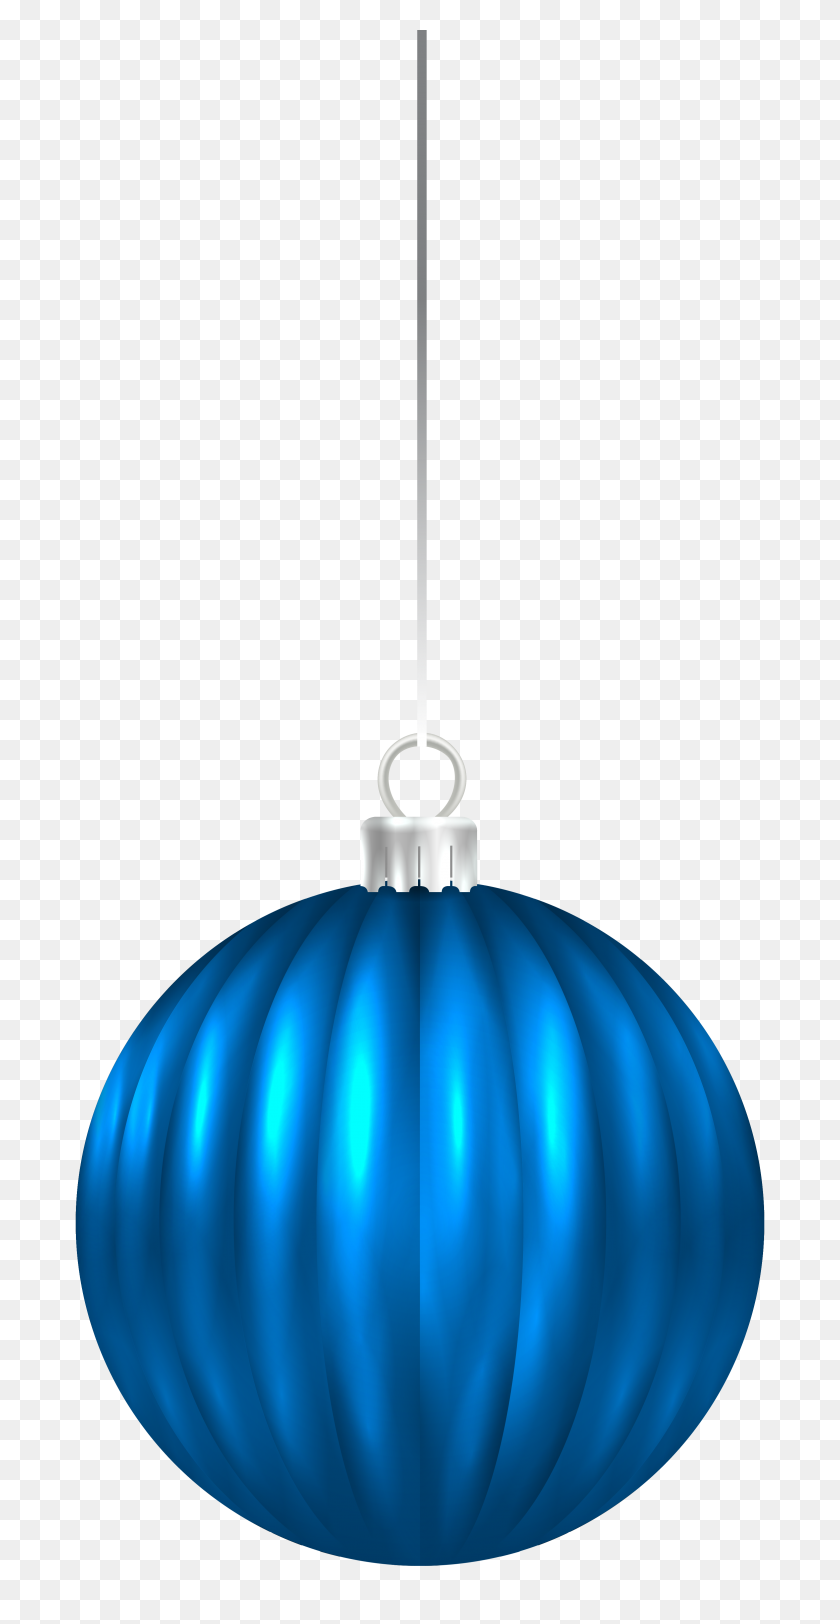 3106x6230 Blue Christmas Ball Ornament Png Clip Art Gallery - Ornament Clipart